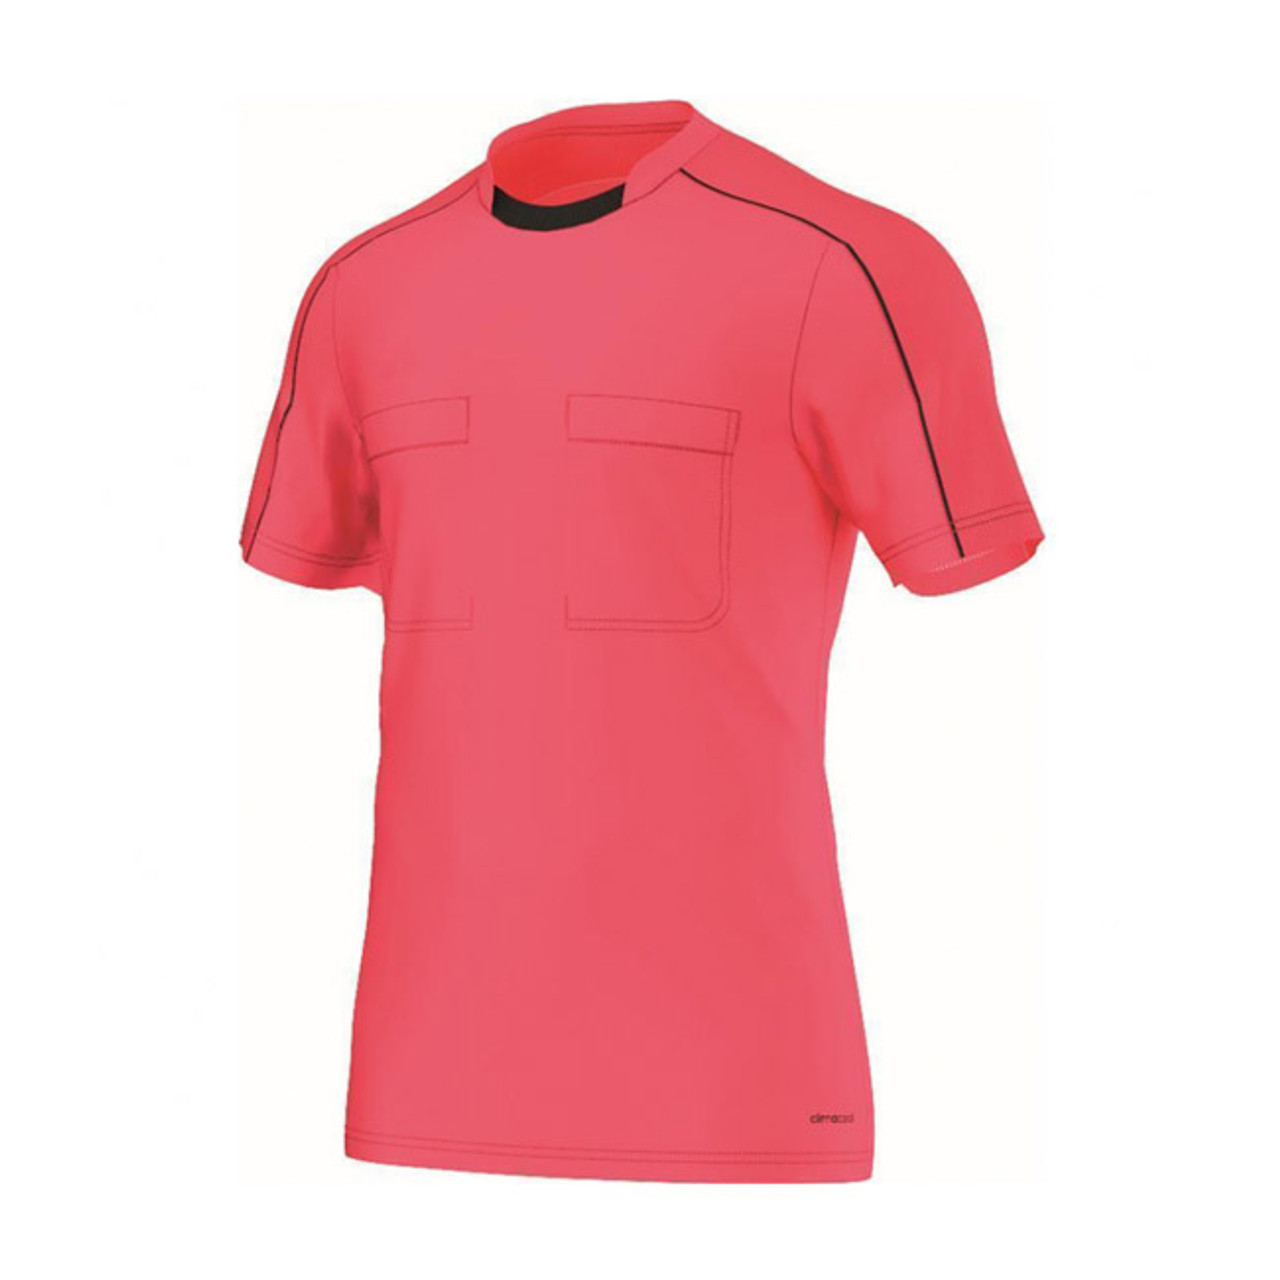 Oh Gracioso dolor de cabeza 2016 Adidas Referee Jersey Short Sleeve (Shock Red)